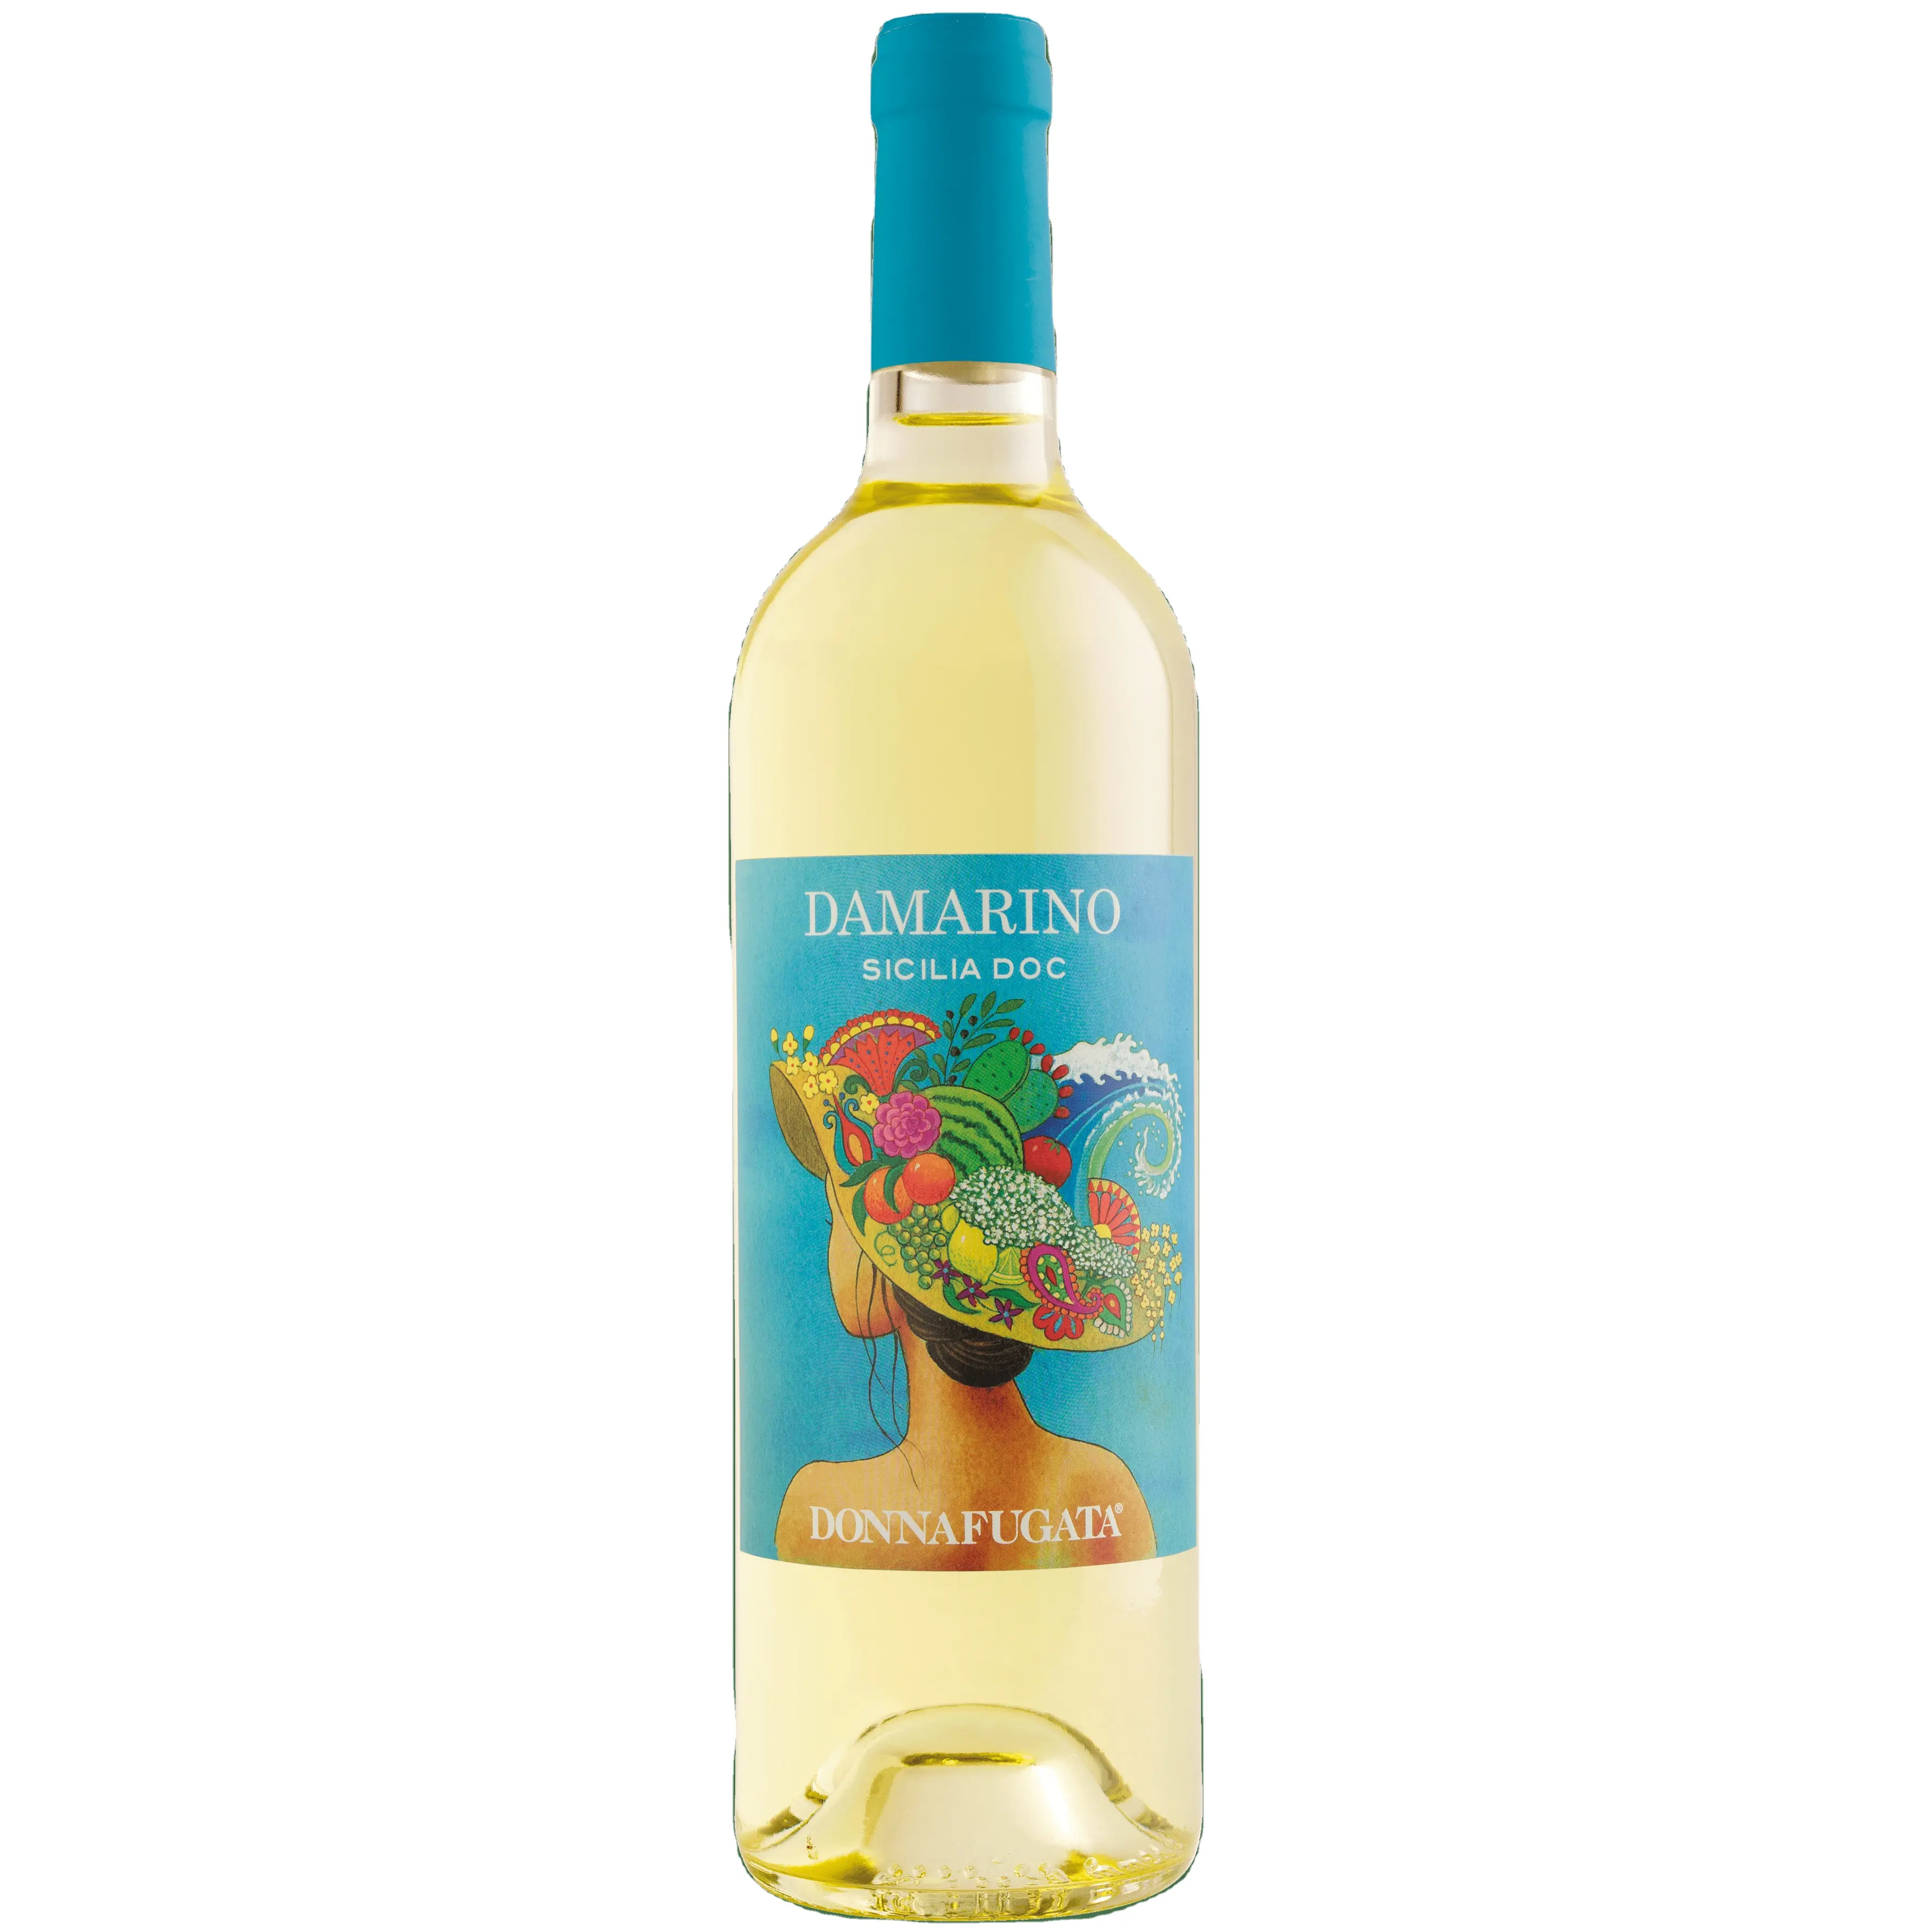 Premium Quality made in Italy white wine Donnafugata DAMARINO 2021 Sicilia DOC fruity notes for export